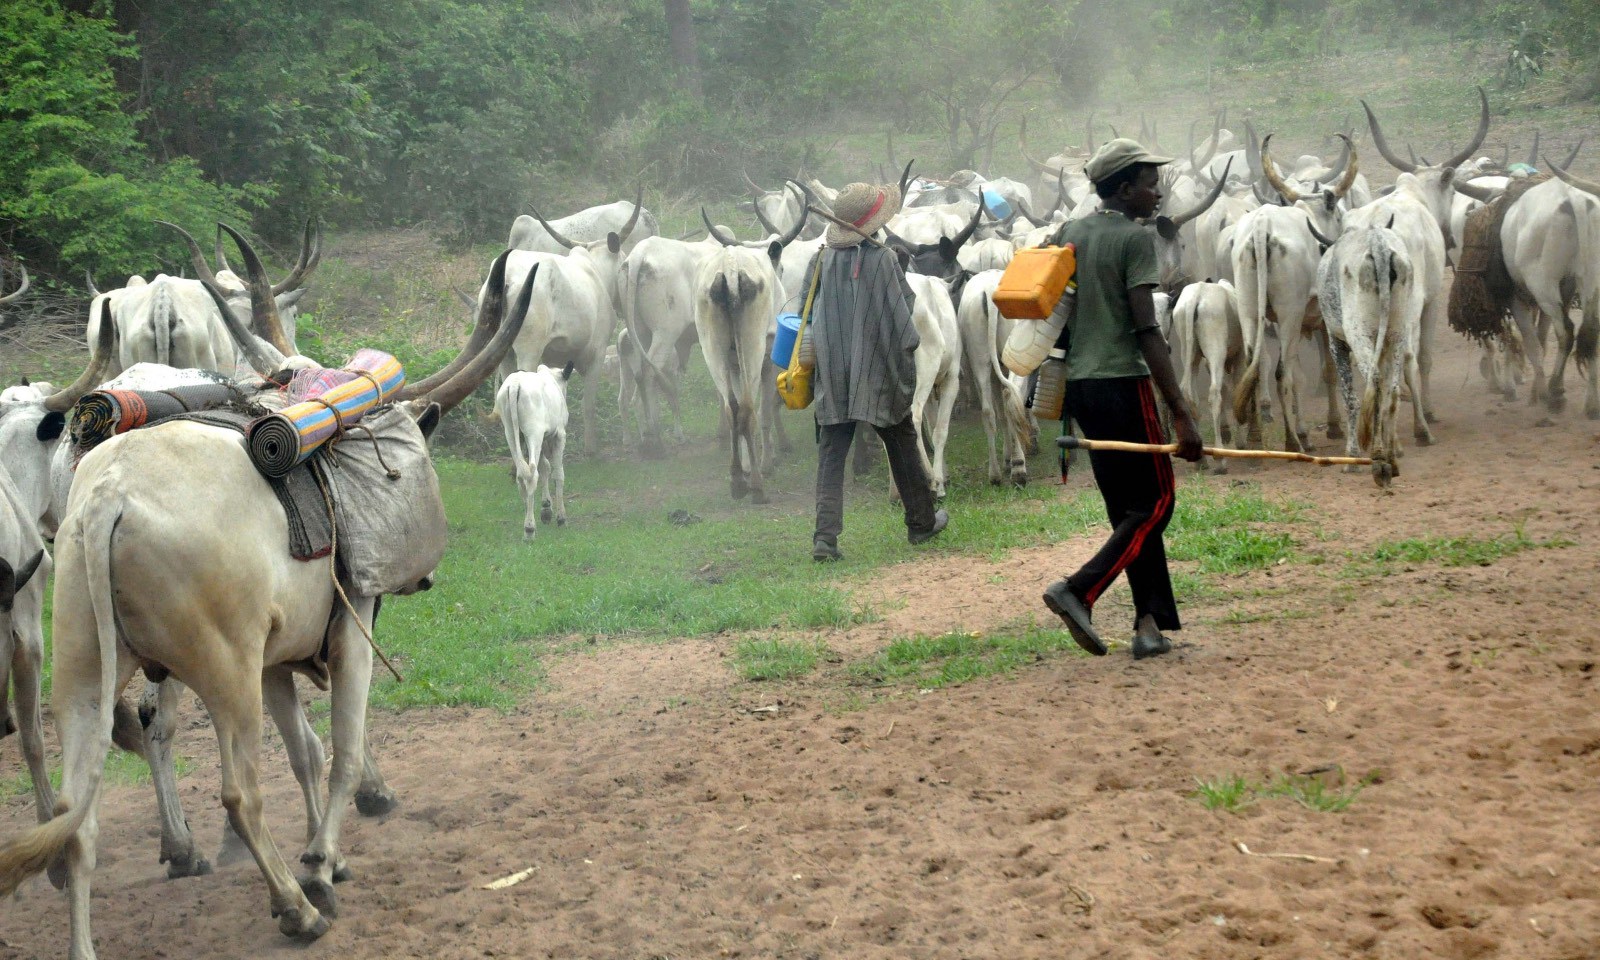 Fulani Herdsmen at the trent fotor